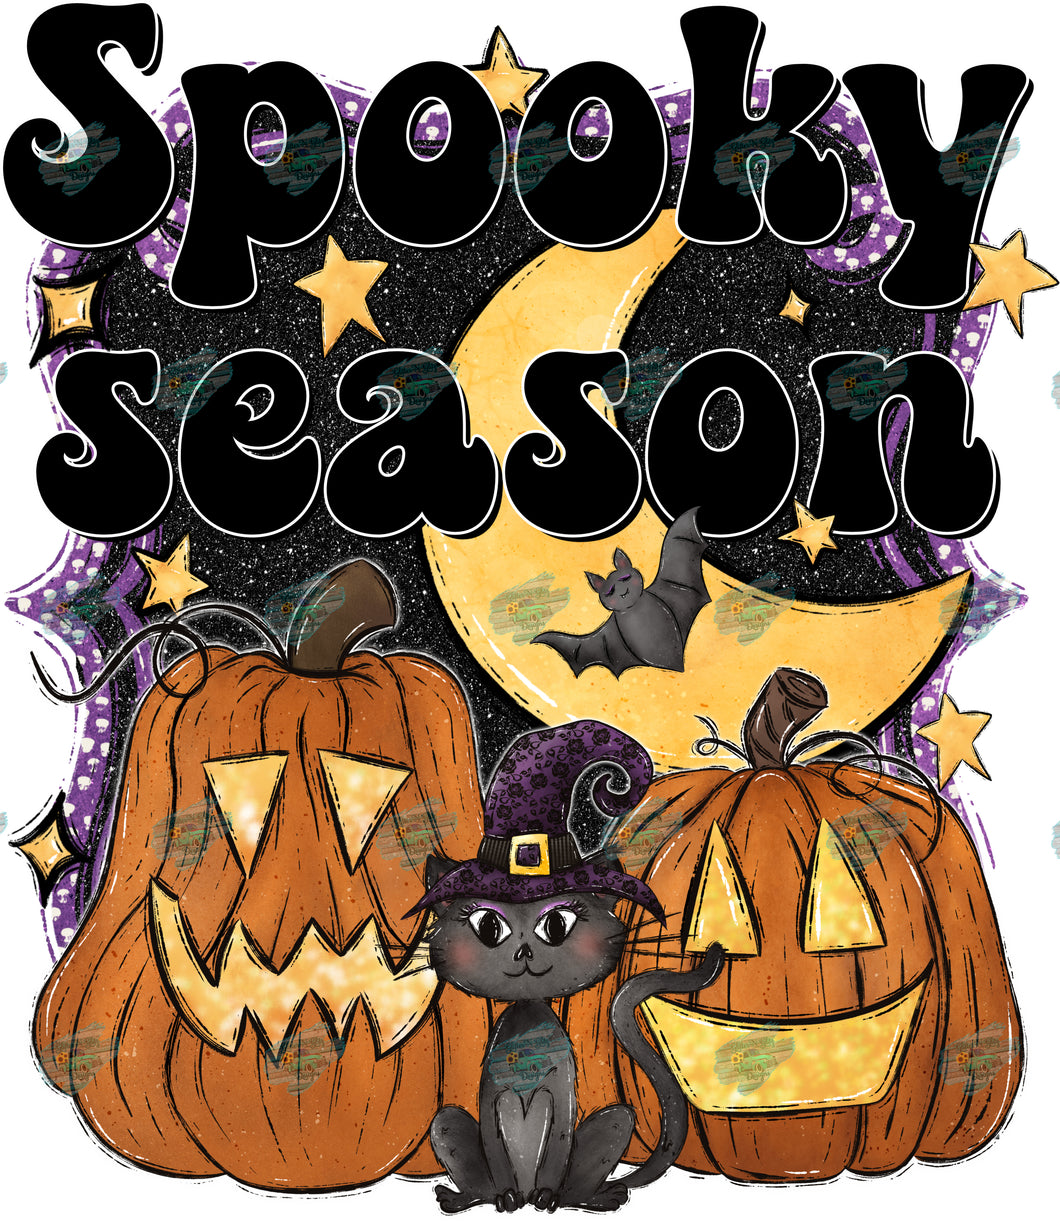 Spooky Season Sublimation Transfer